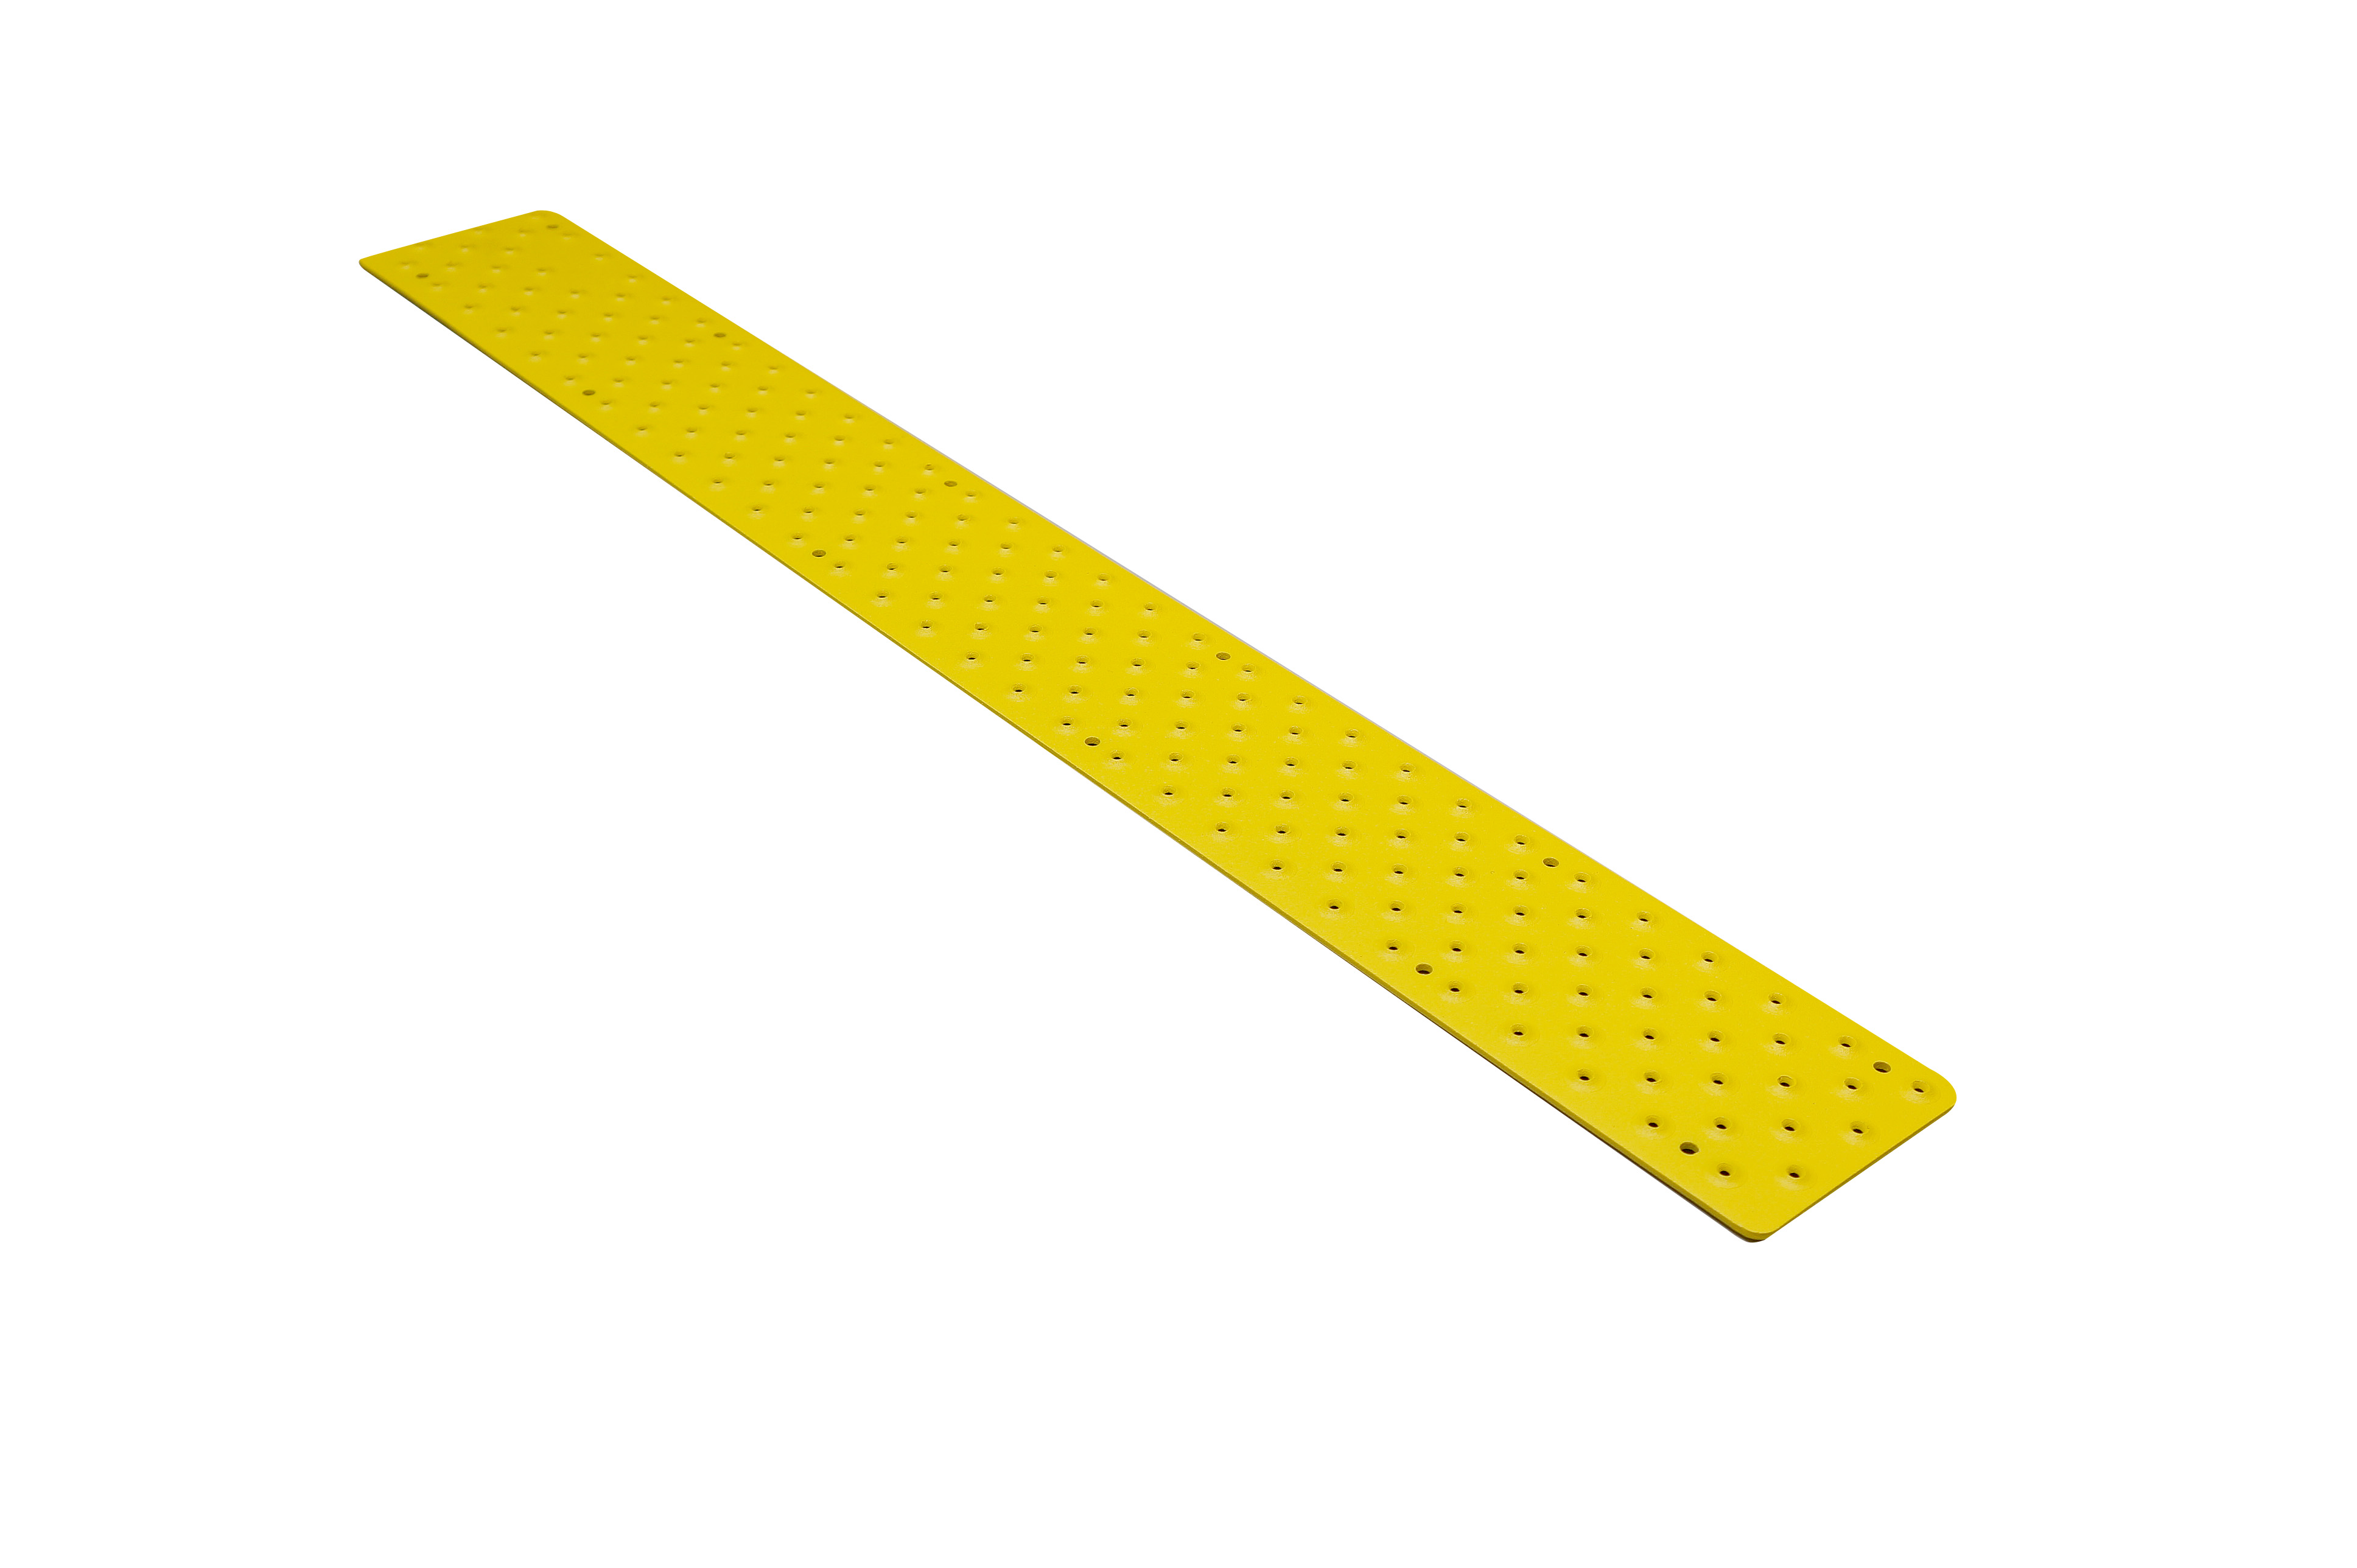 Handi Treads Aluminum Powder Coated Safety Non-slip Stair Tread Yellow